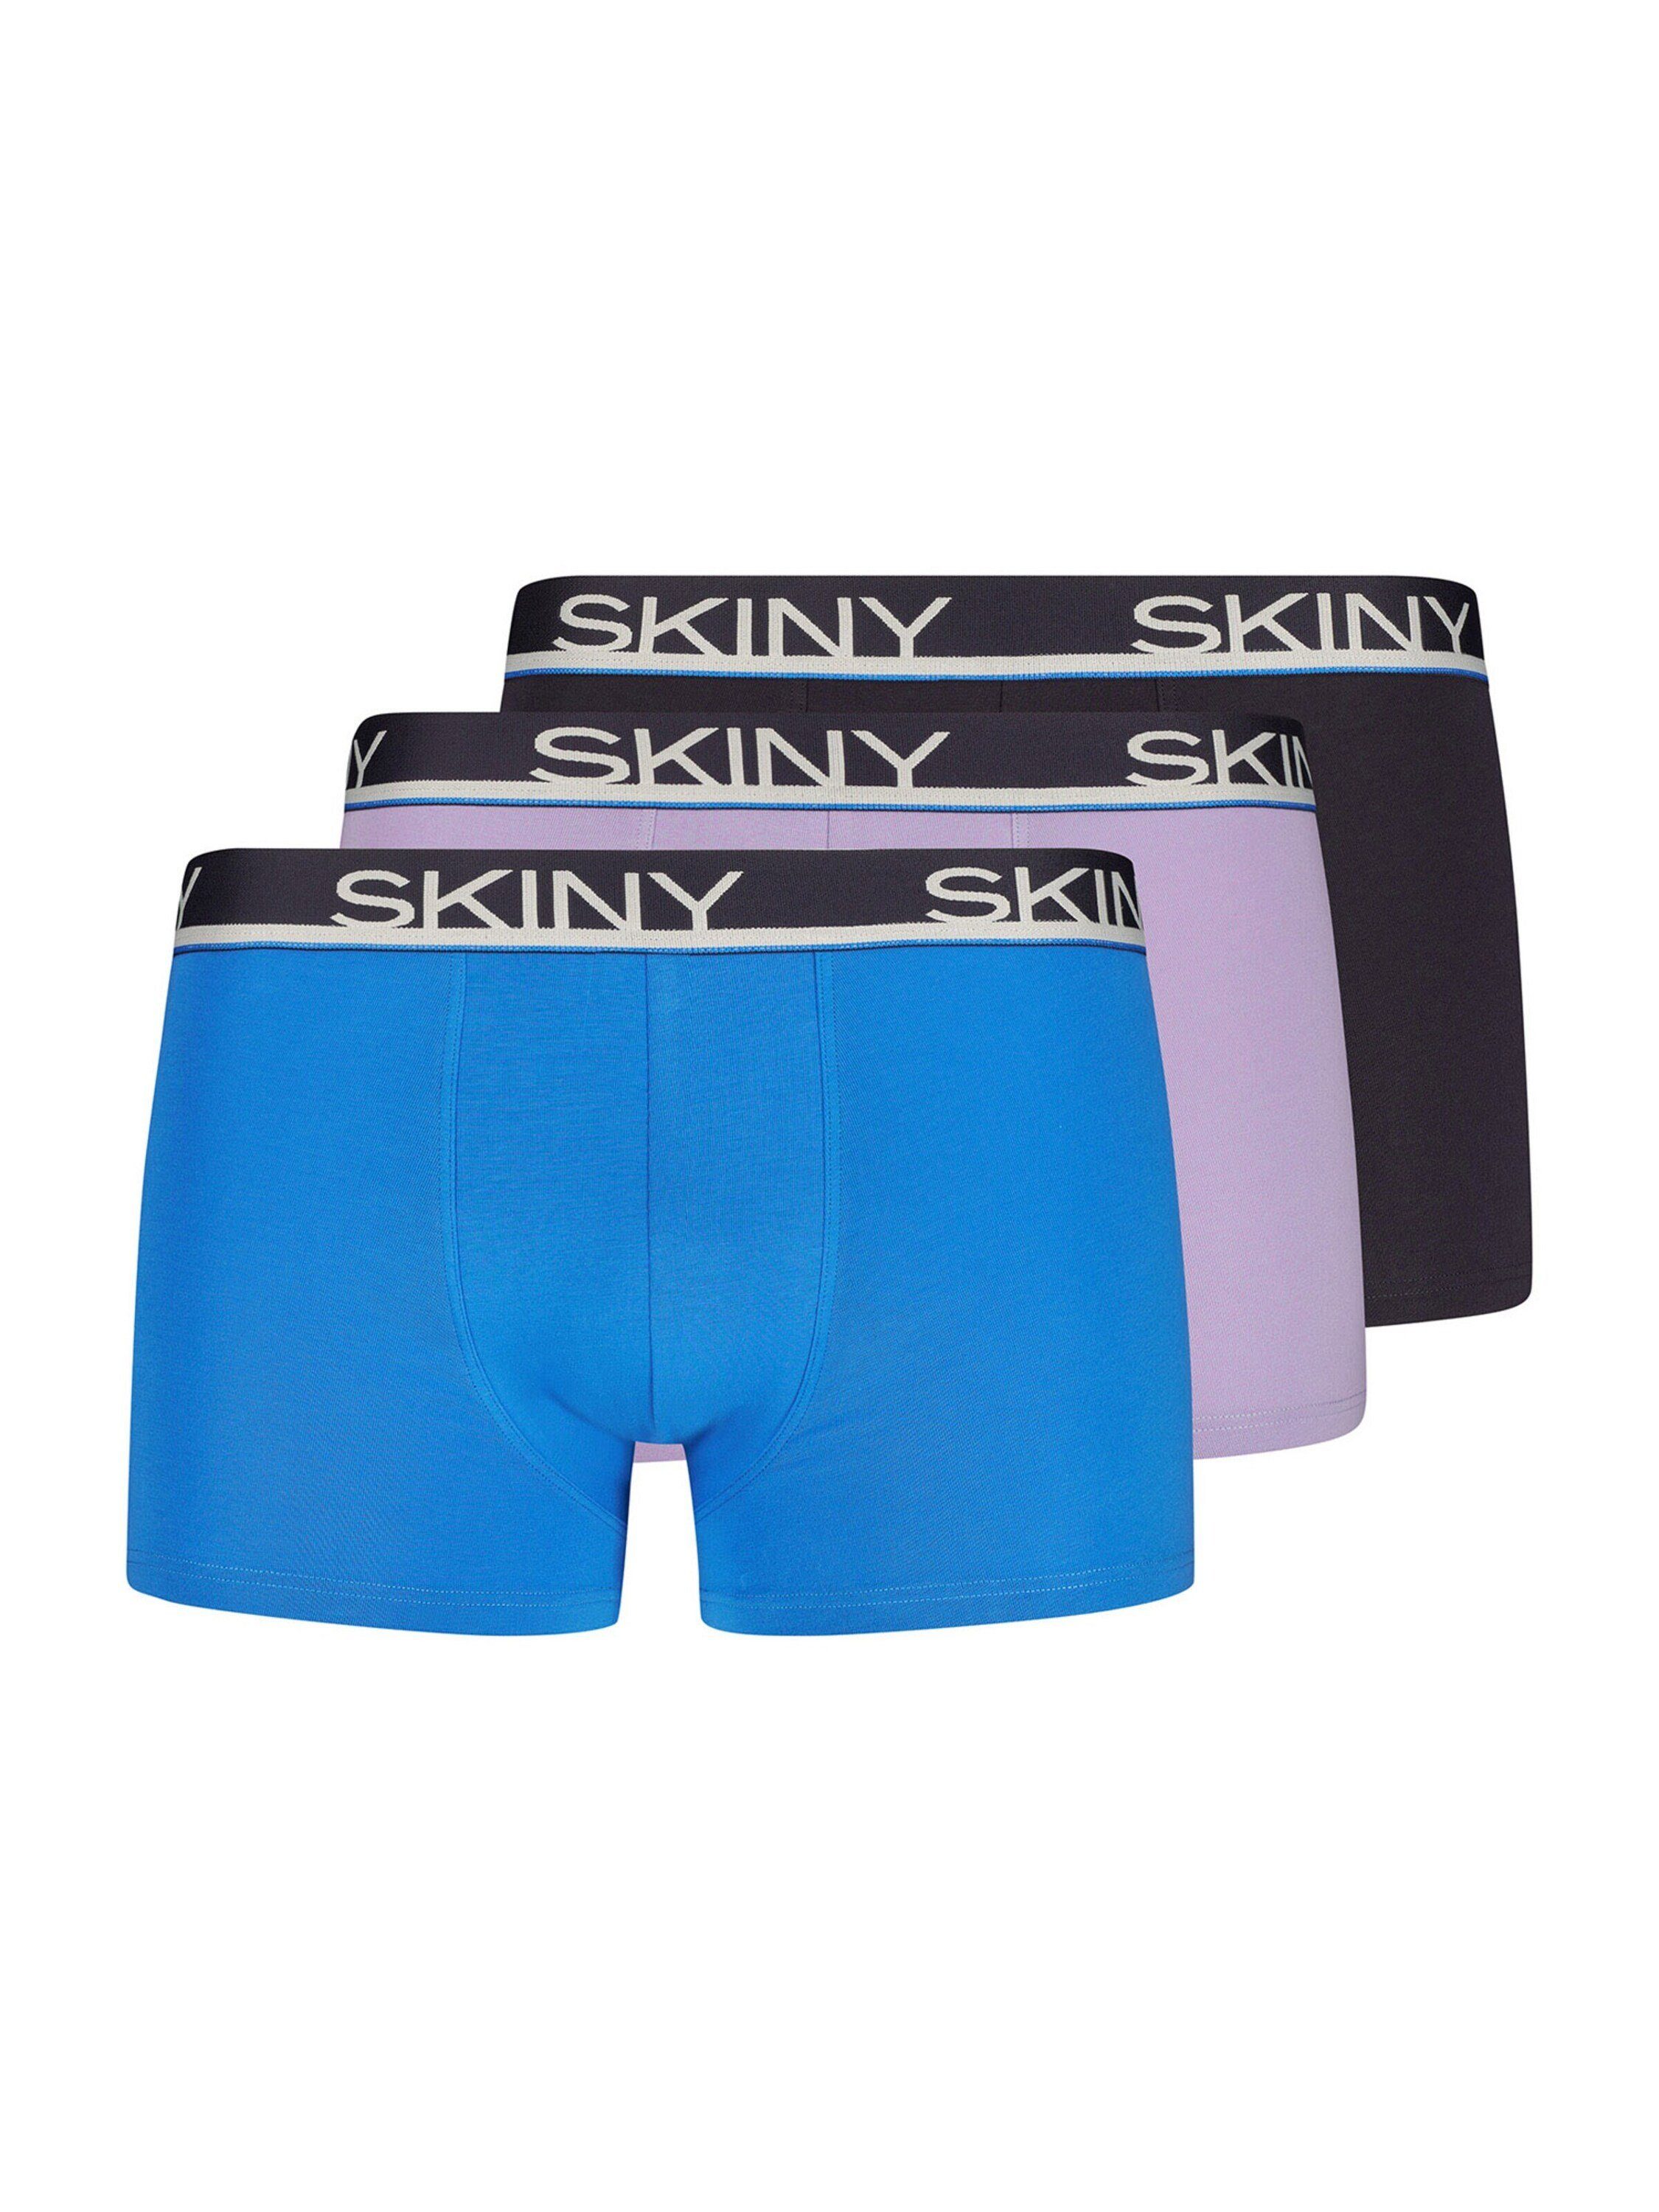 Skiny Boxershorts (3-St) Blau/Flieder